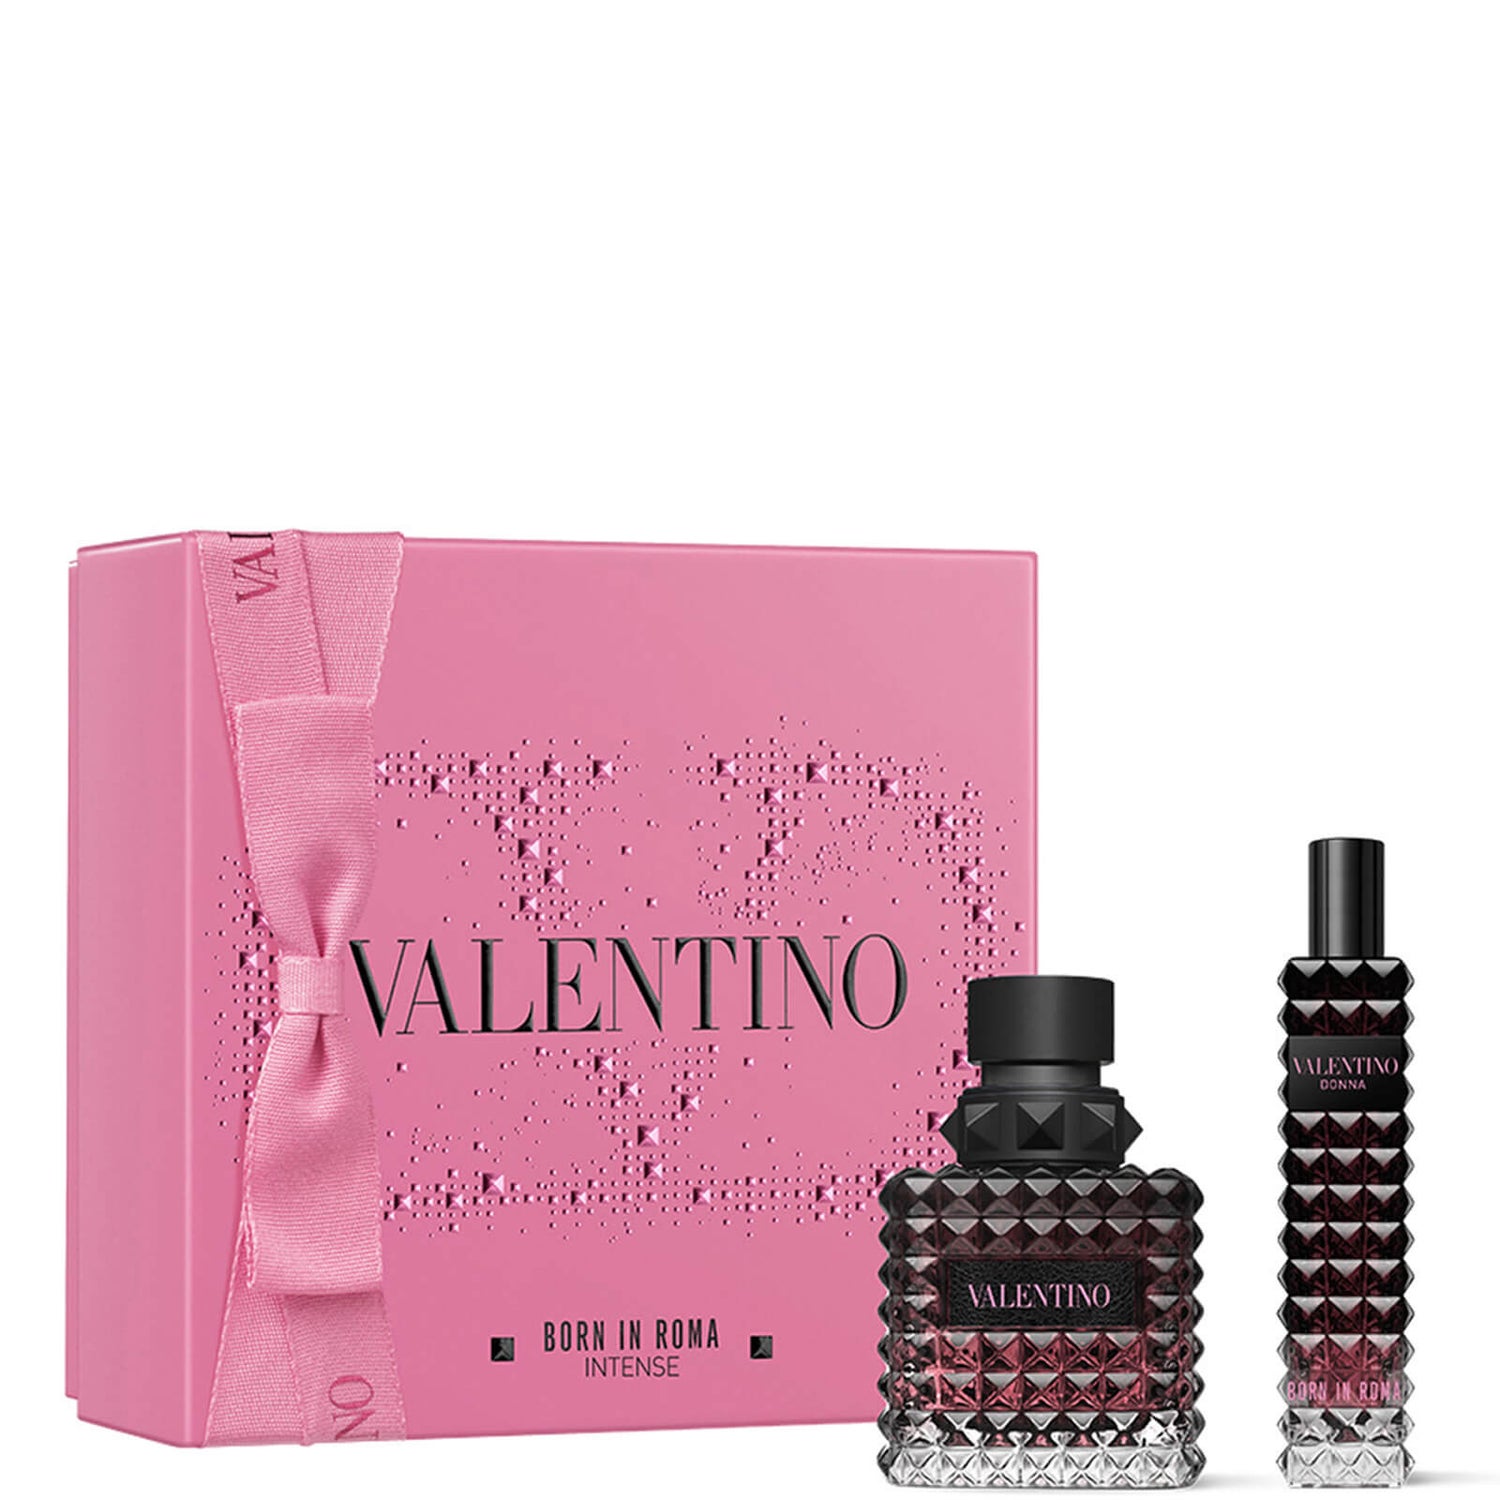 Valentino Born in Roma Donna intense 50ml Eau de Parfum Gift Set (Worth £105.00)